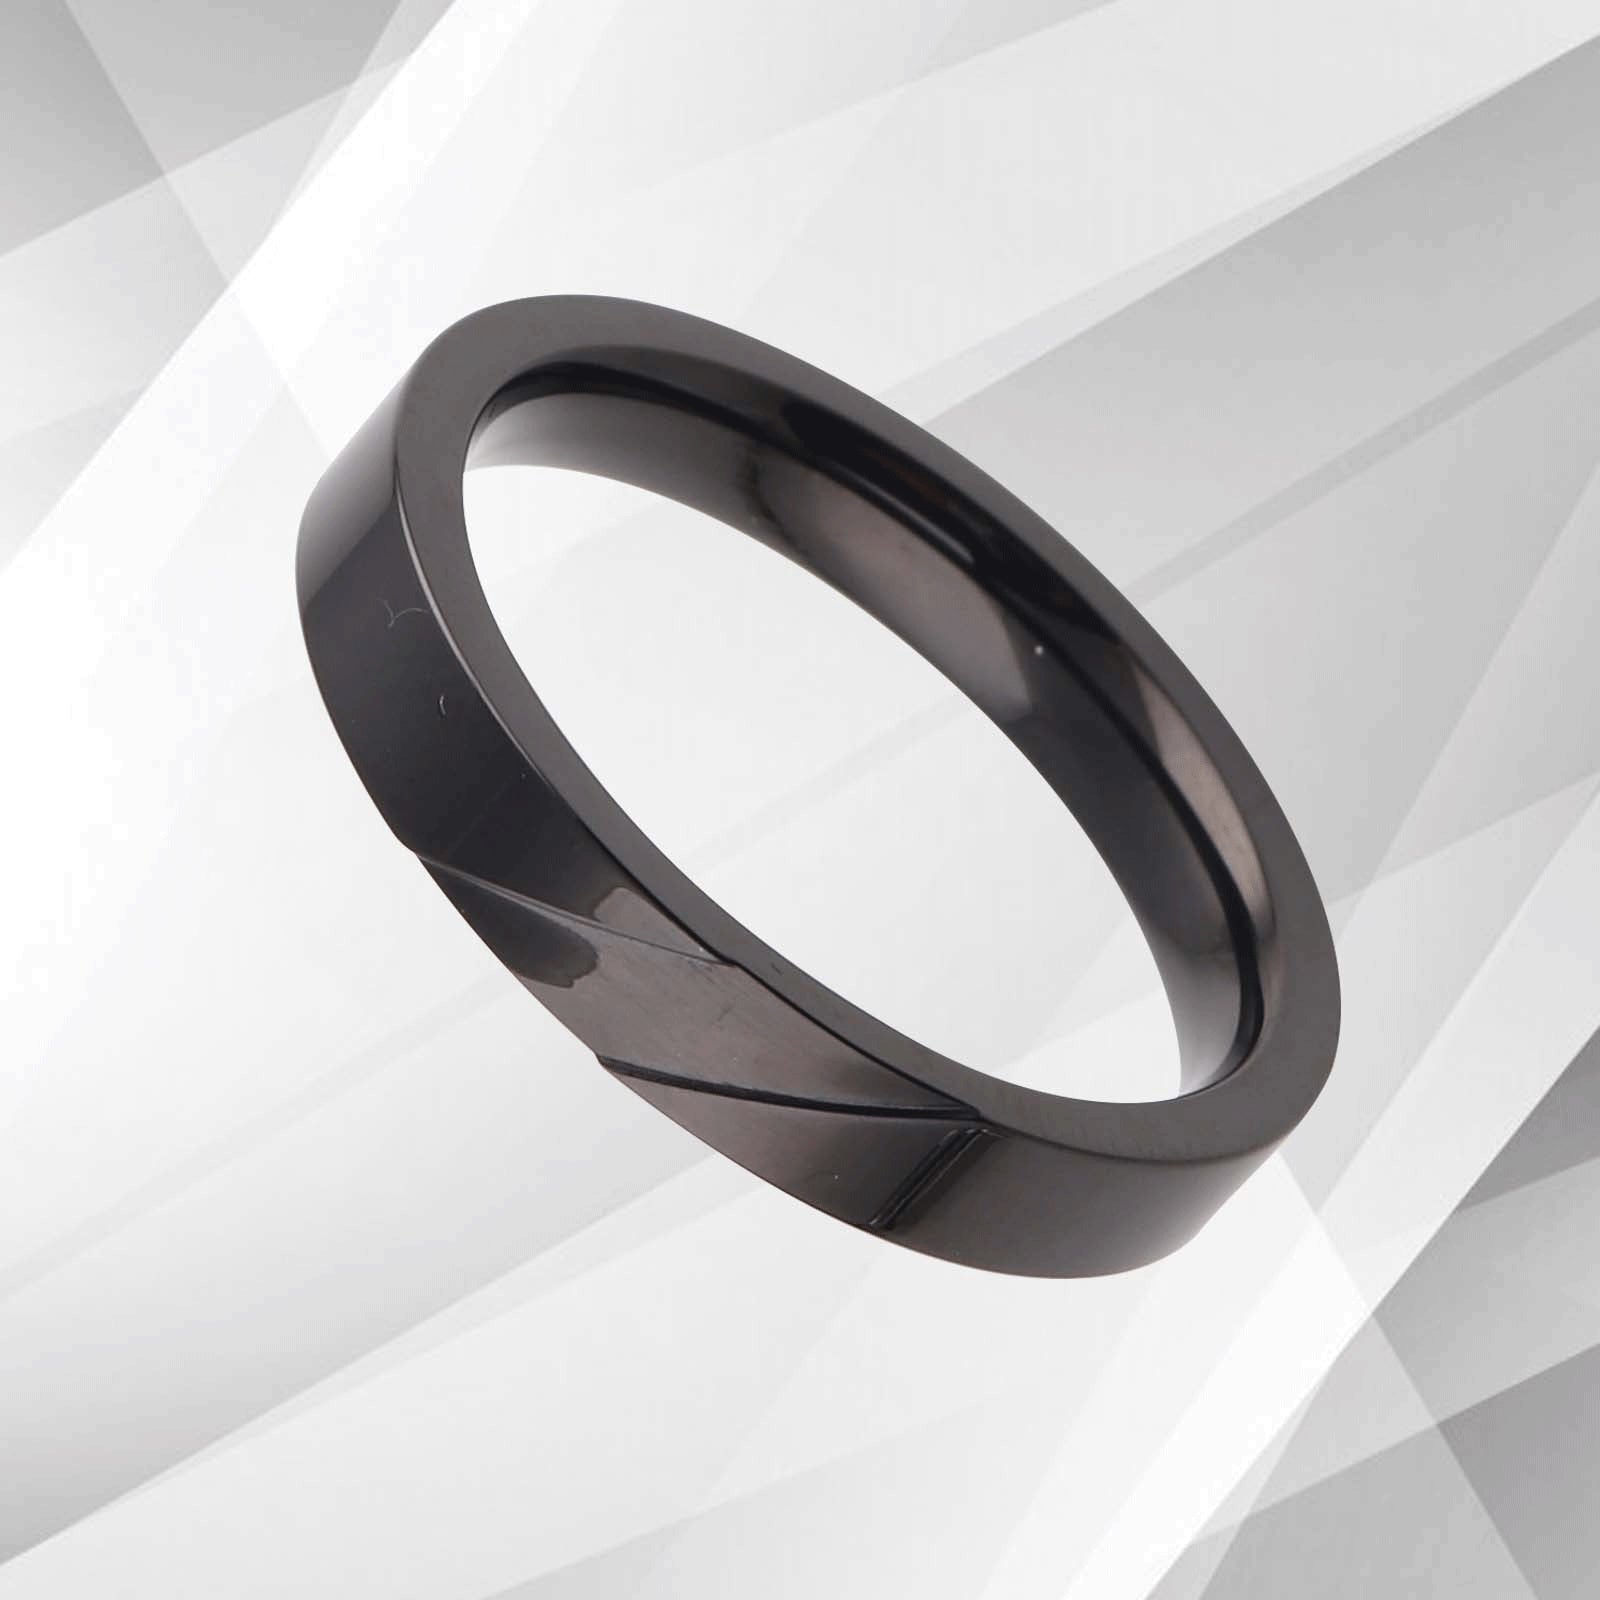 18Ct Black Gold Titanium Band Ring - Hypoallergenic, Handmade, Comfort Fit for Men's Wedding, Engagement, Anniversary Bijou Her